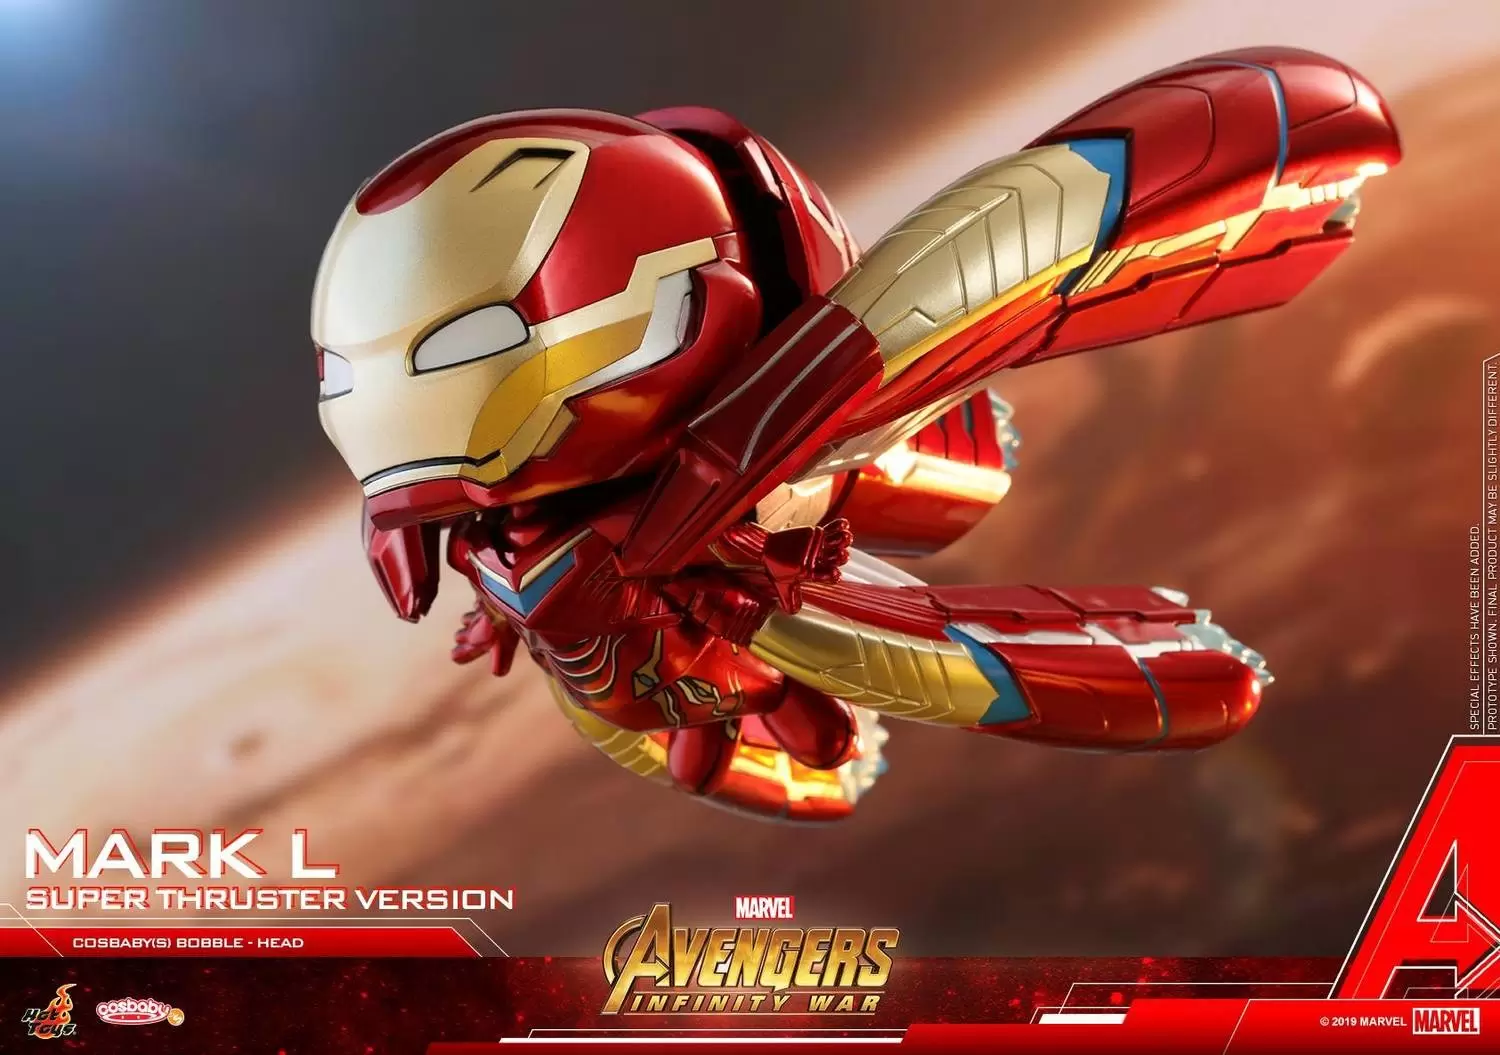 Cosbaby Figures - Avengers: Infinity War - Iron Man Mark L (Super Thruster Version)